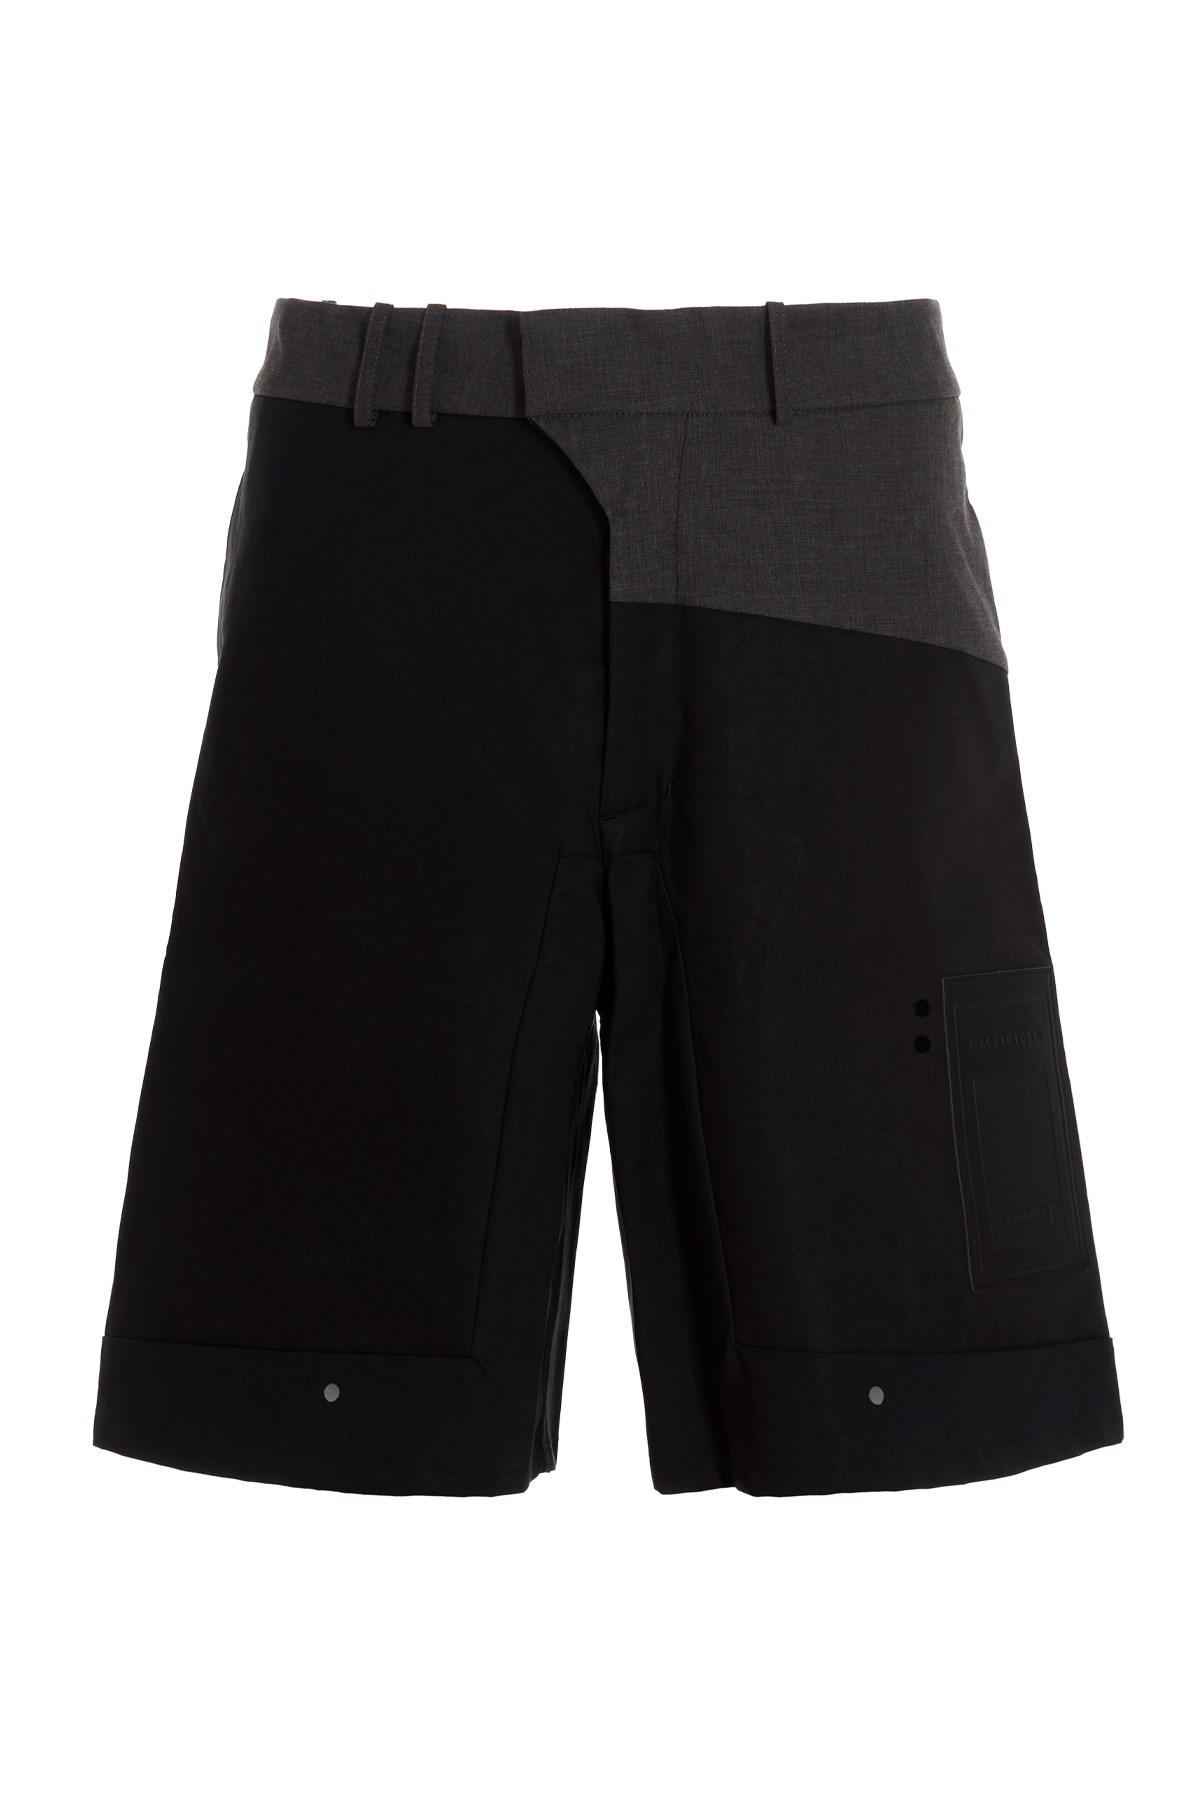 A-COLD-WALL* Mackintosh Collab.  Bermuda Shorts